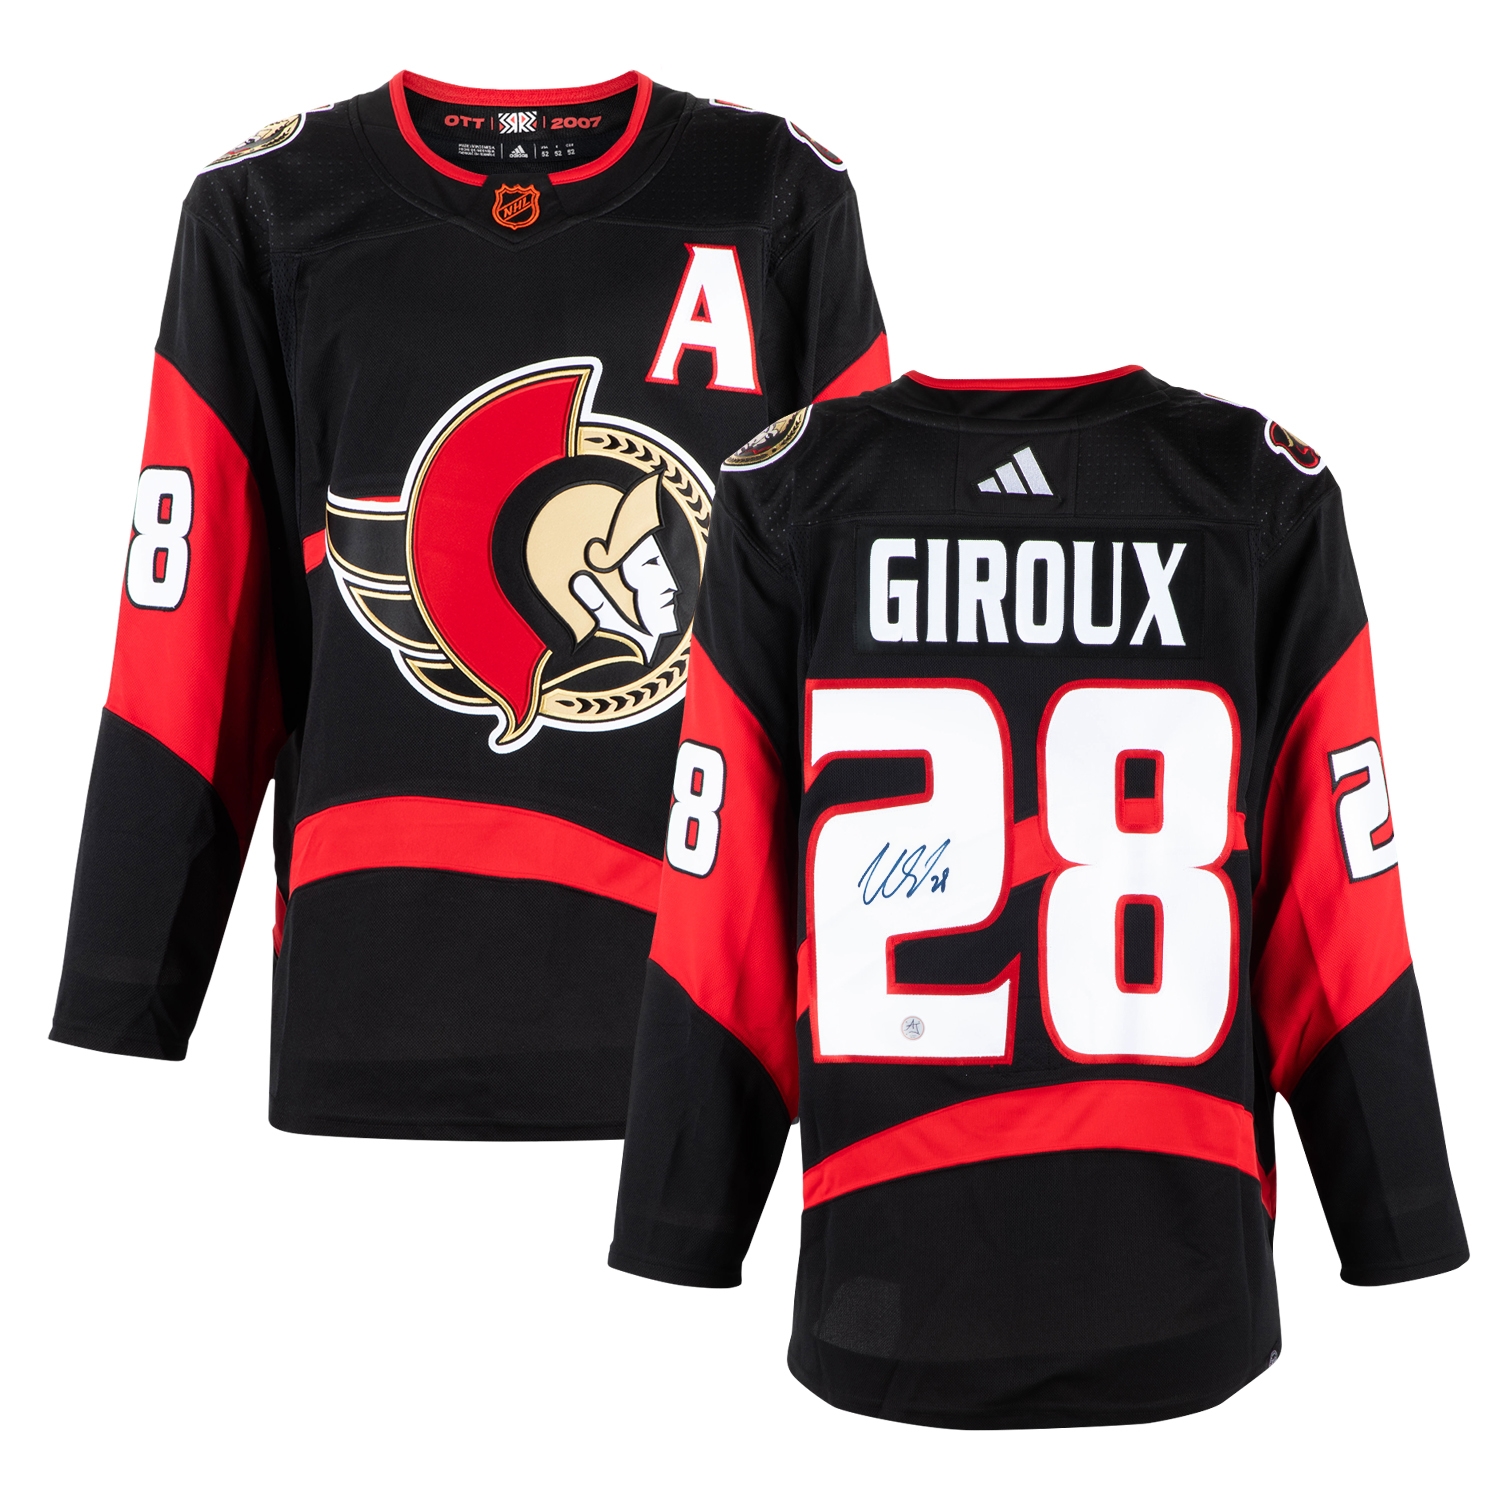 Claude Giroux Signed Ottawa Senators Reverse Retro 2.0 adidas Jersey